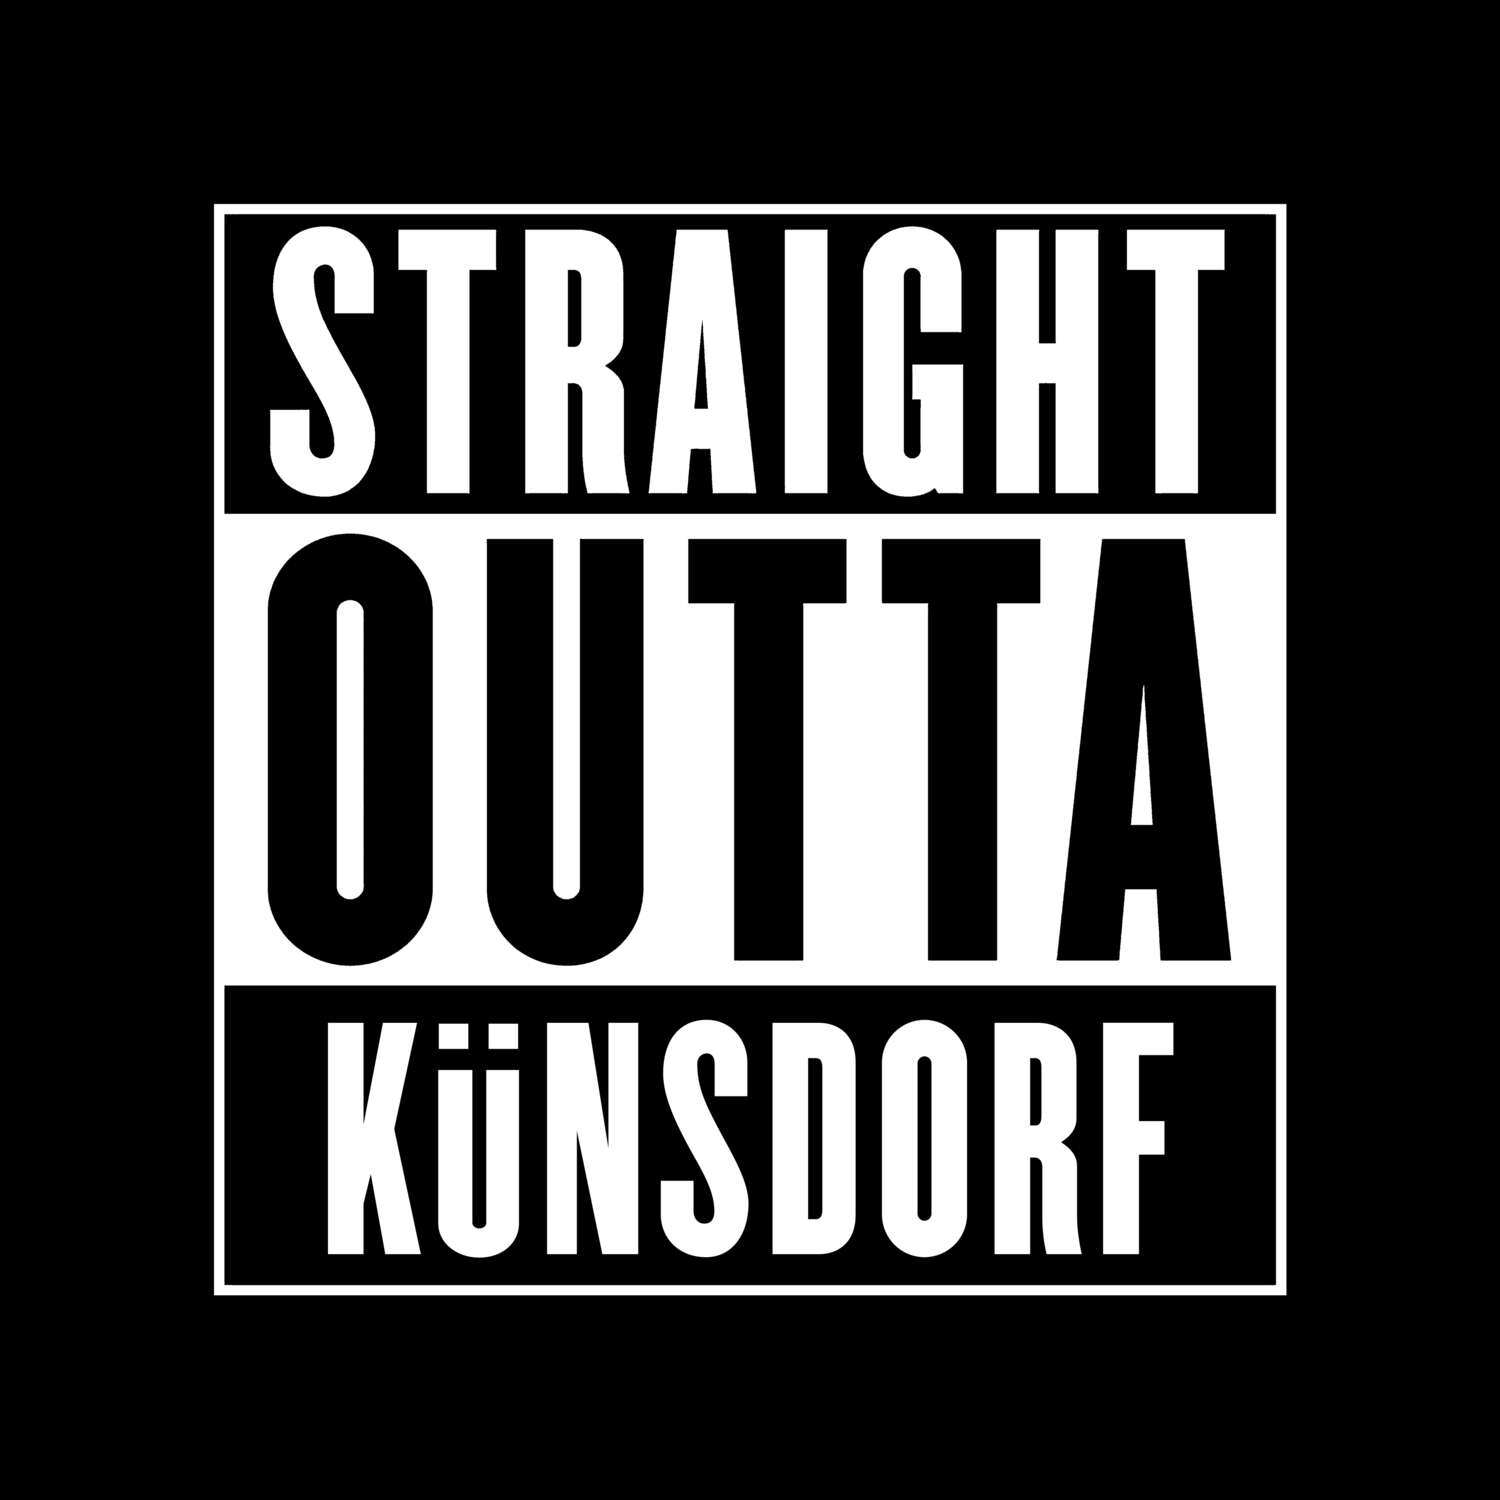 Künsdorf T-Shirt »Straight Outta«